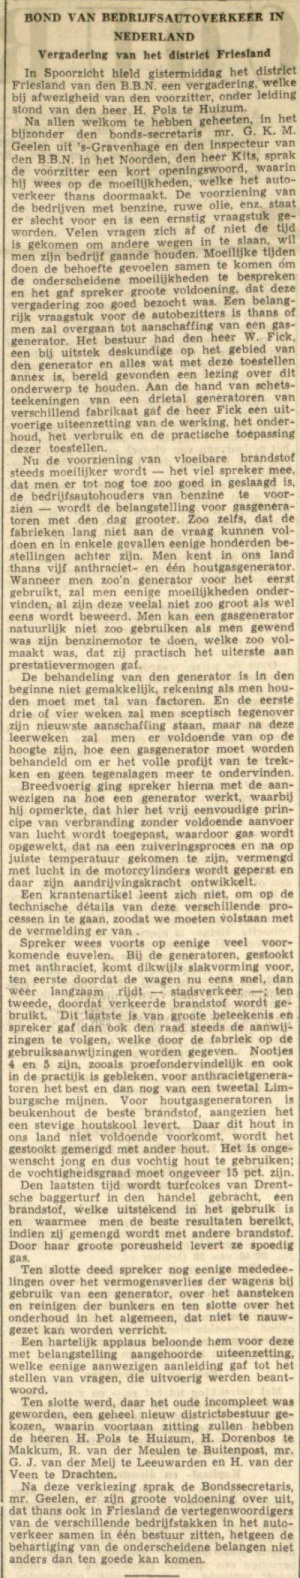 Leeuwarder courant, 16-11-1940